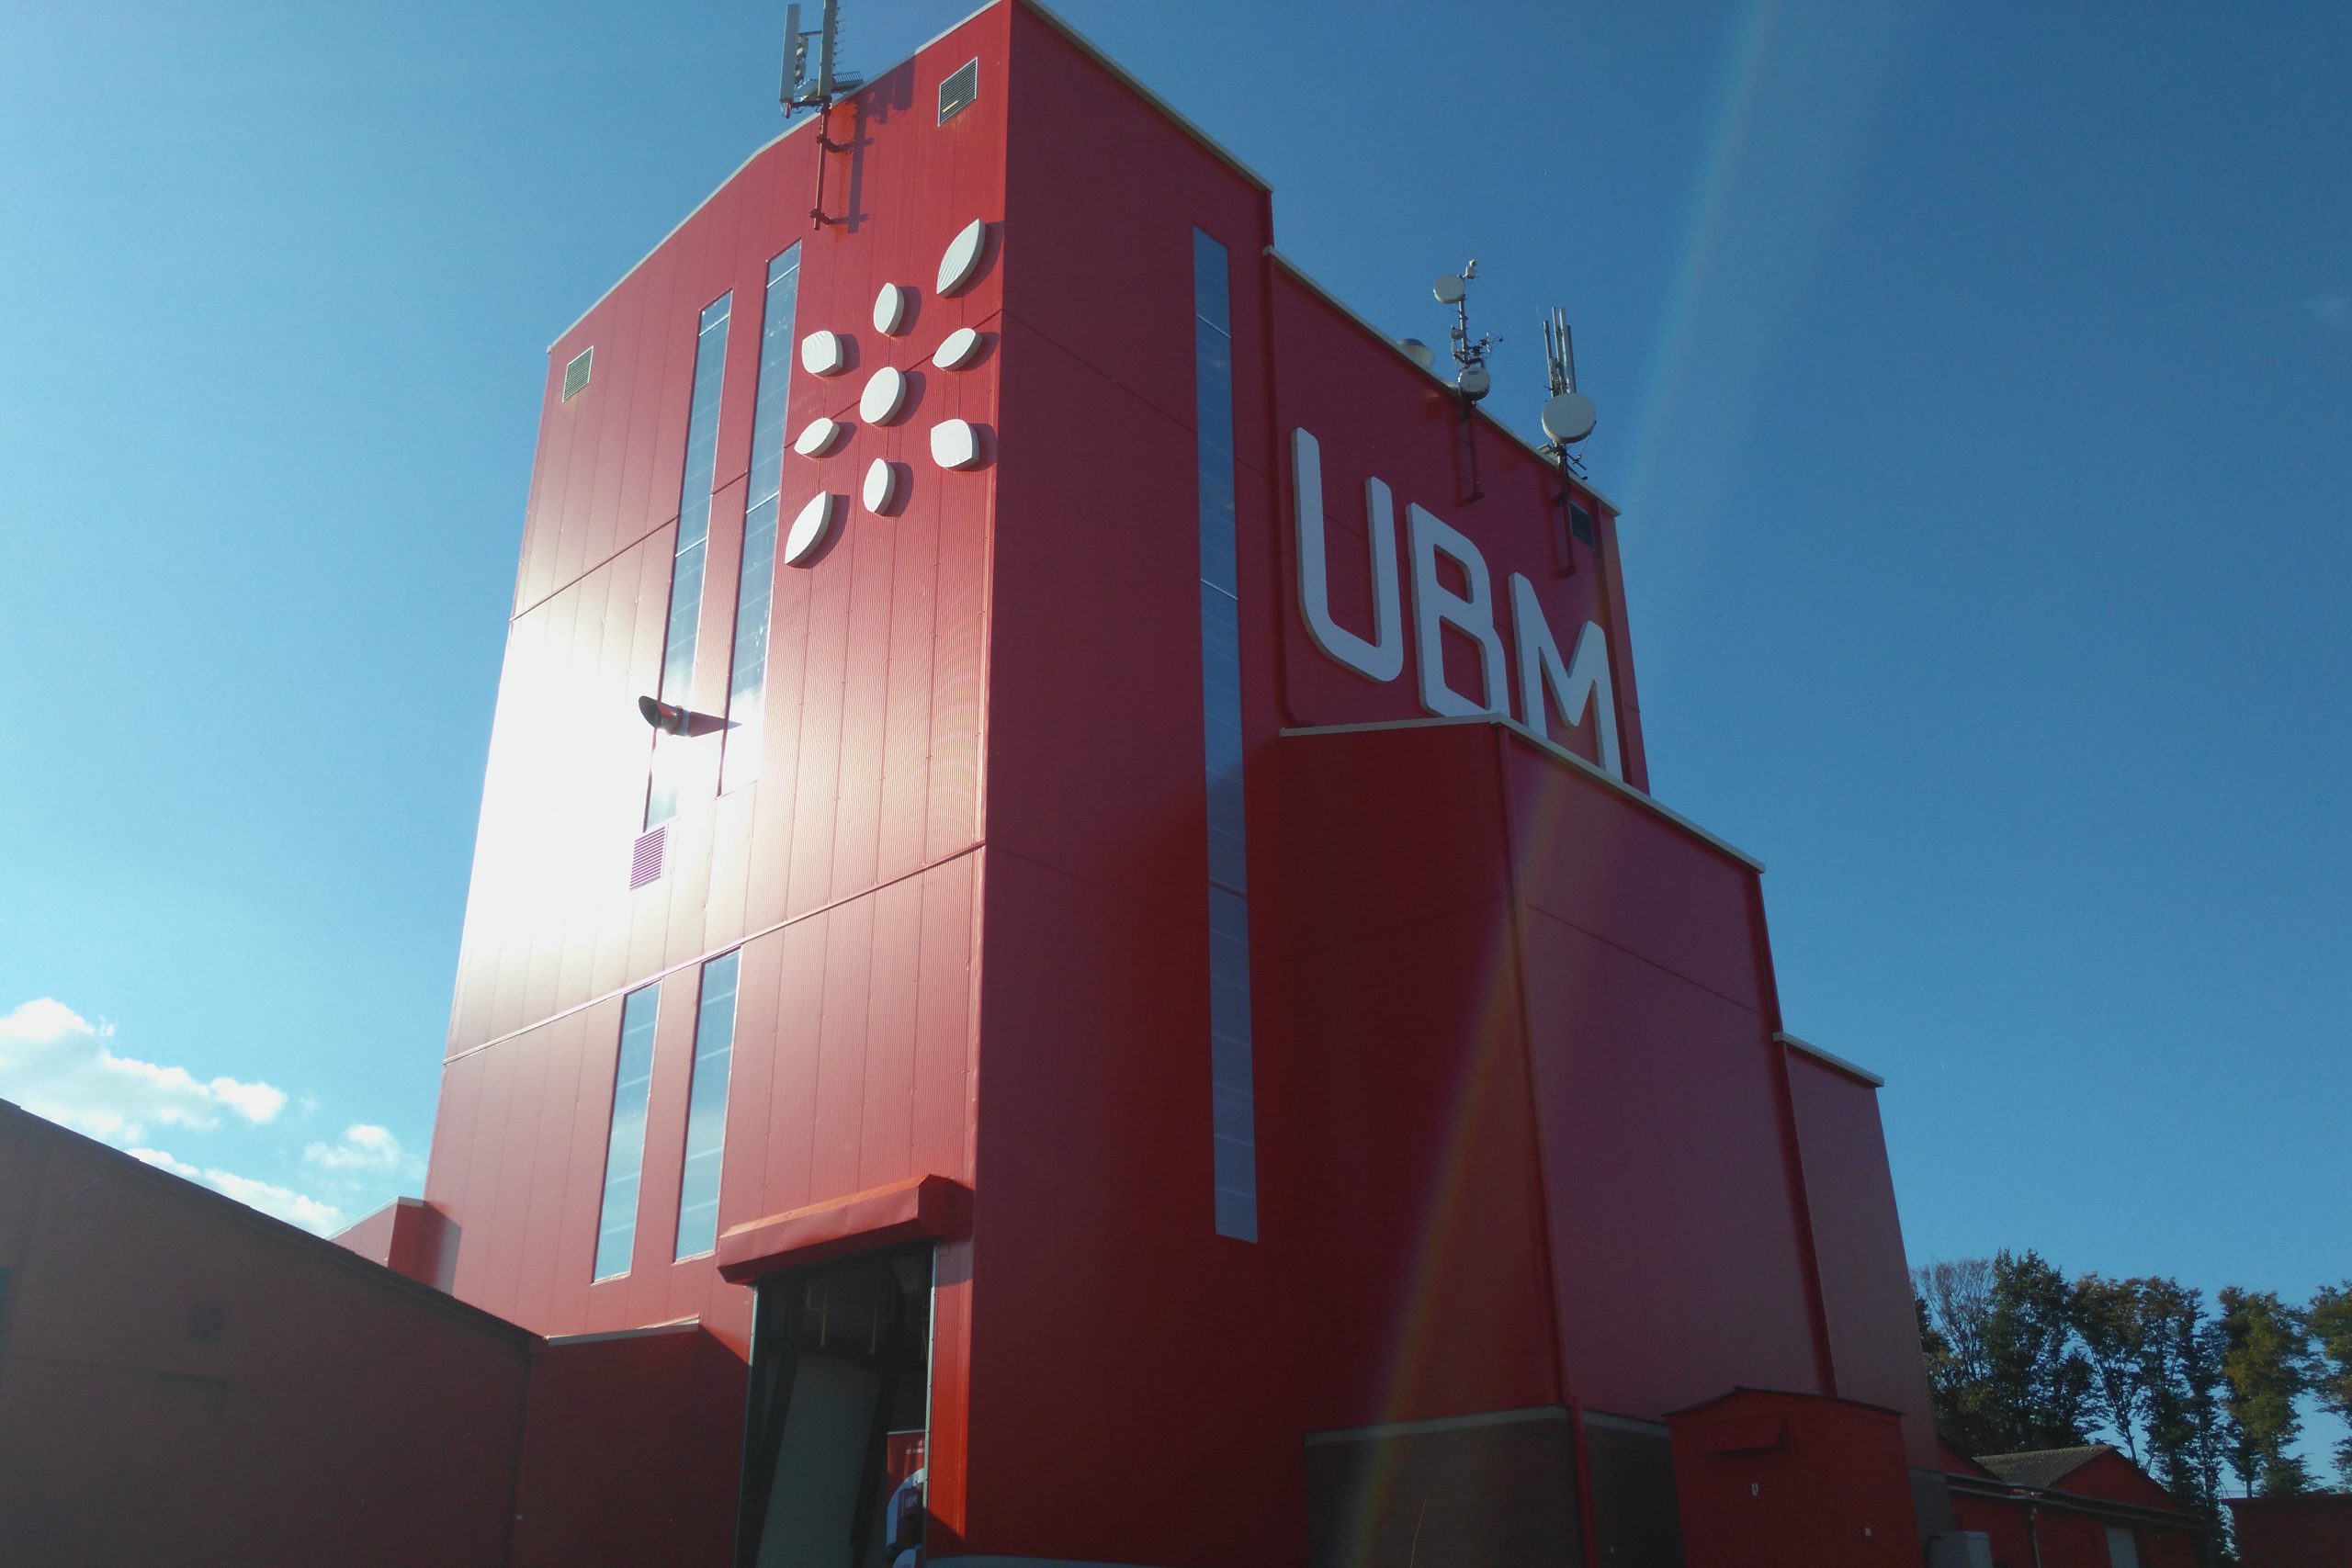 The Környe premix plant. Photo: UBM